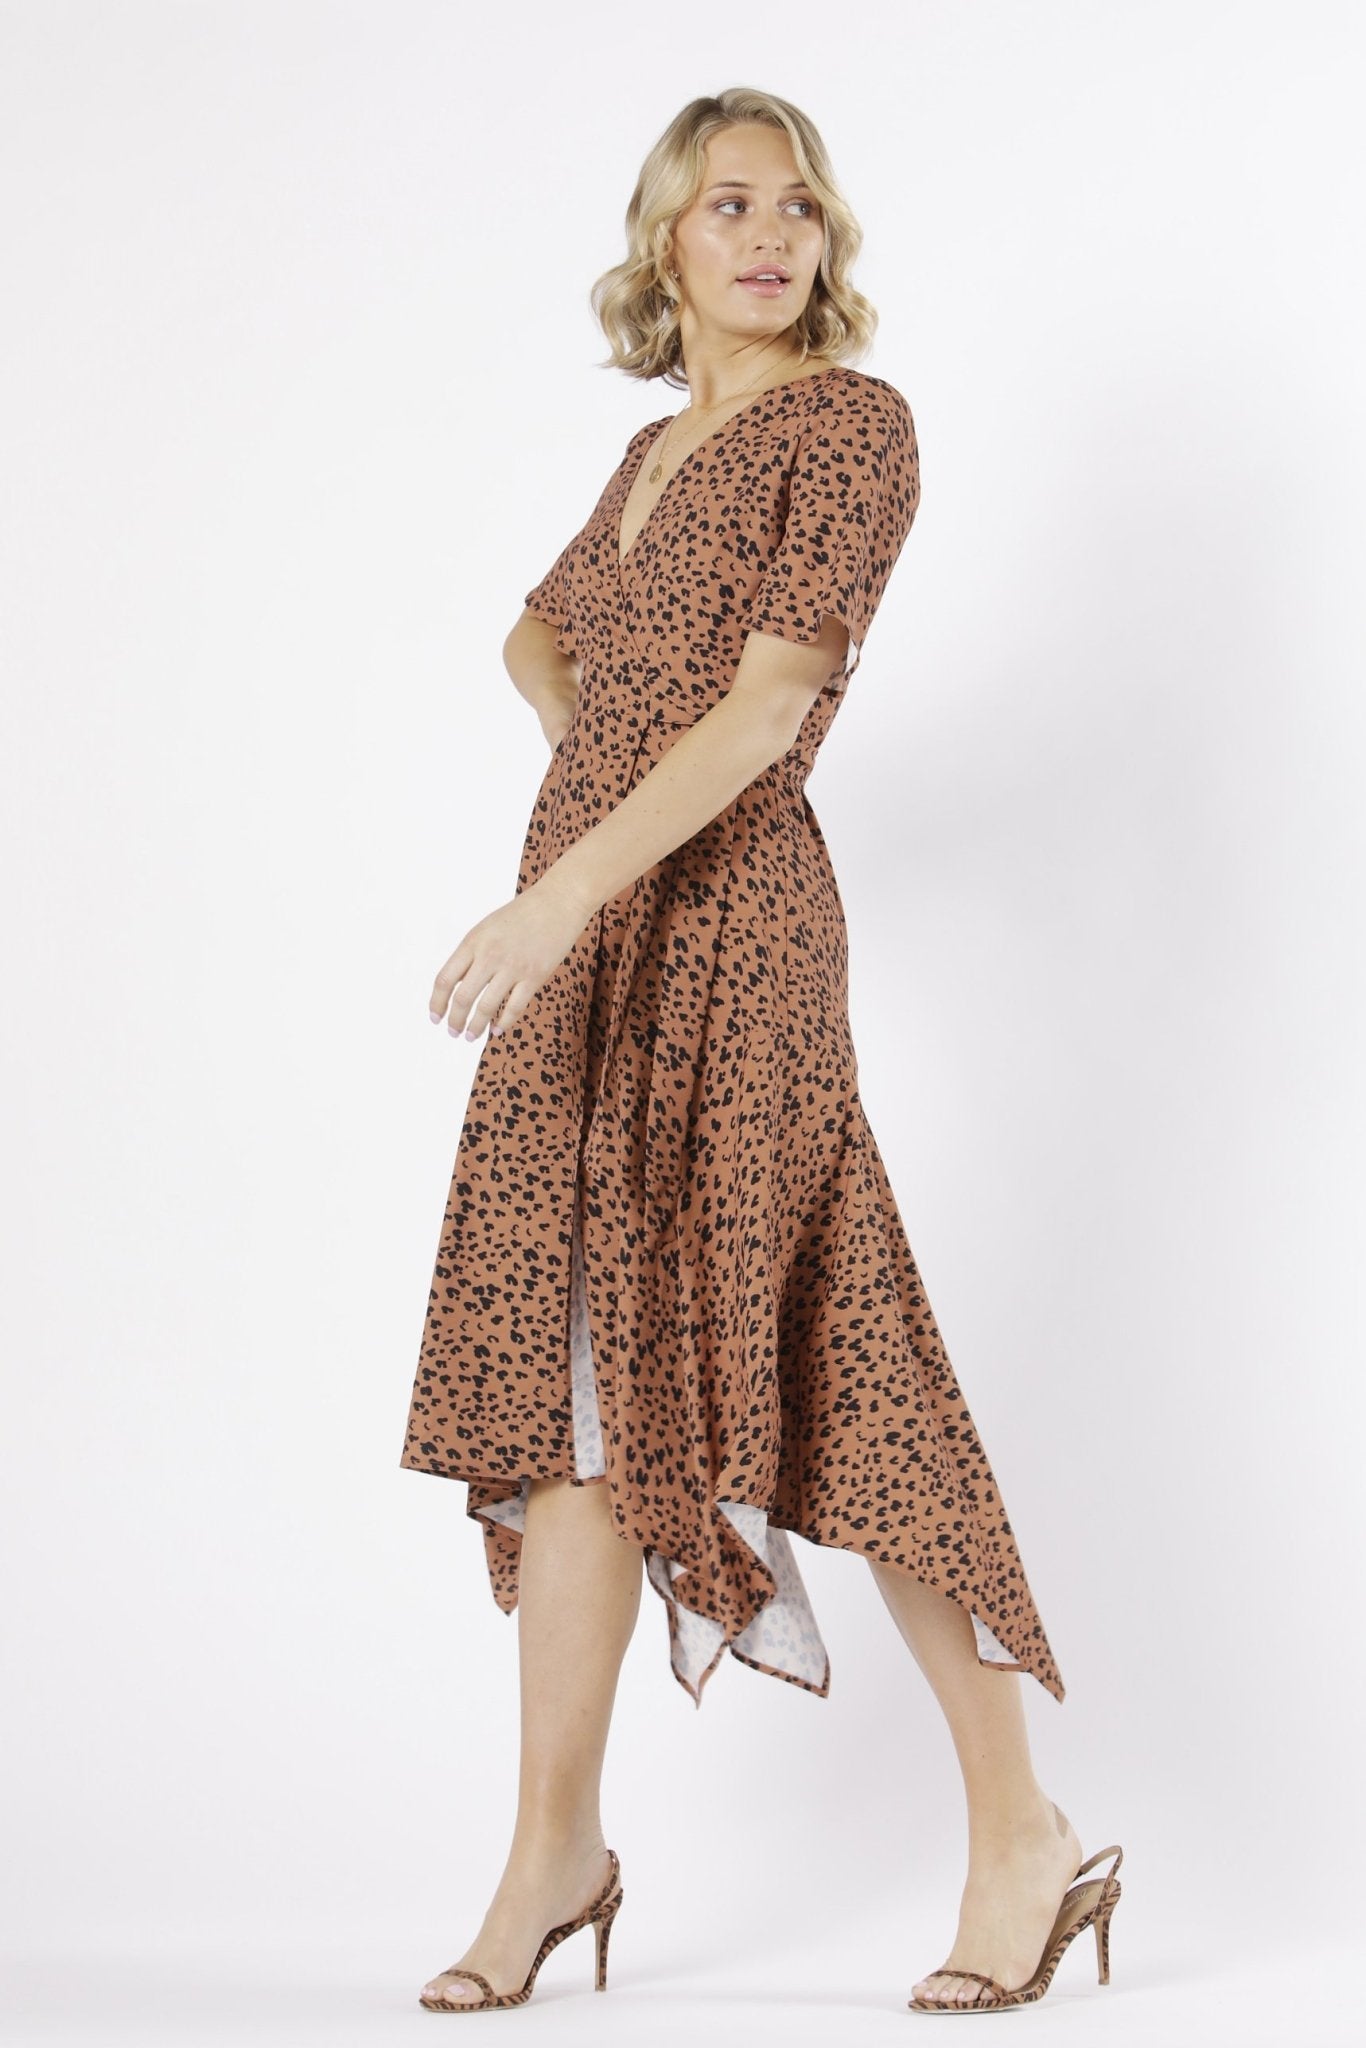 Fate + Becker Under Your Spell Midi Dress in Leopard - Hey Sara